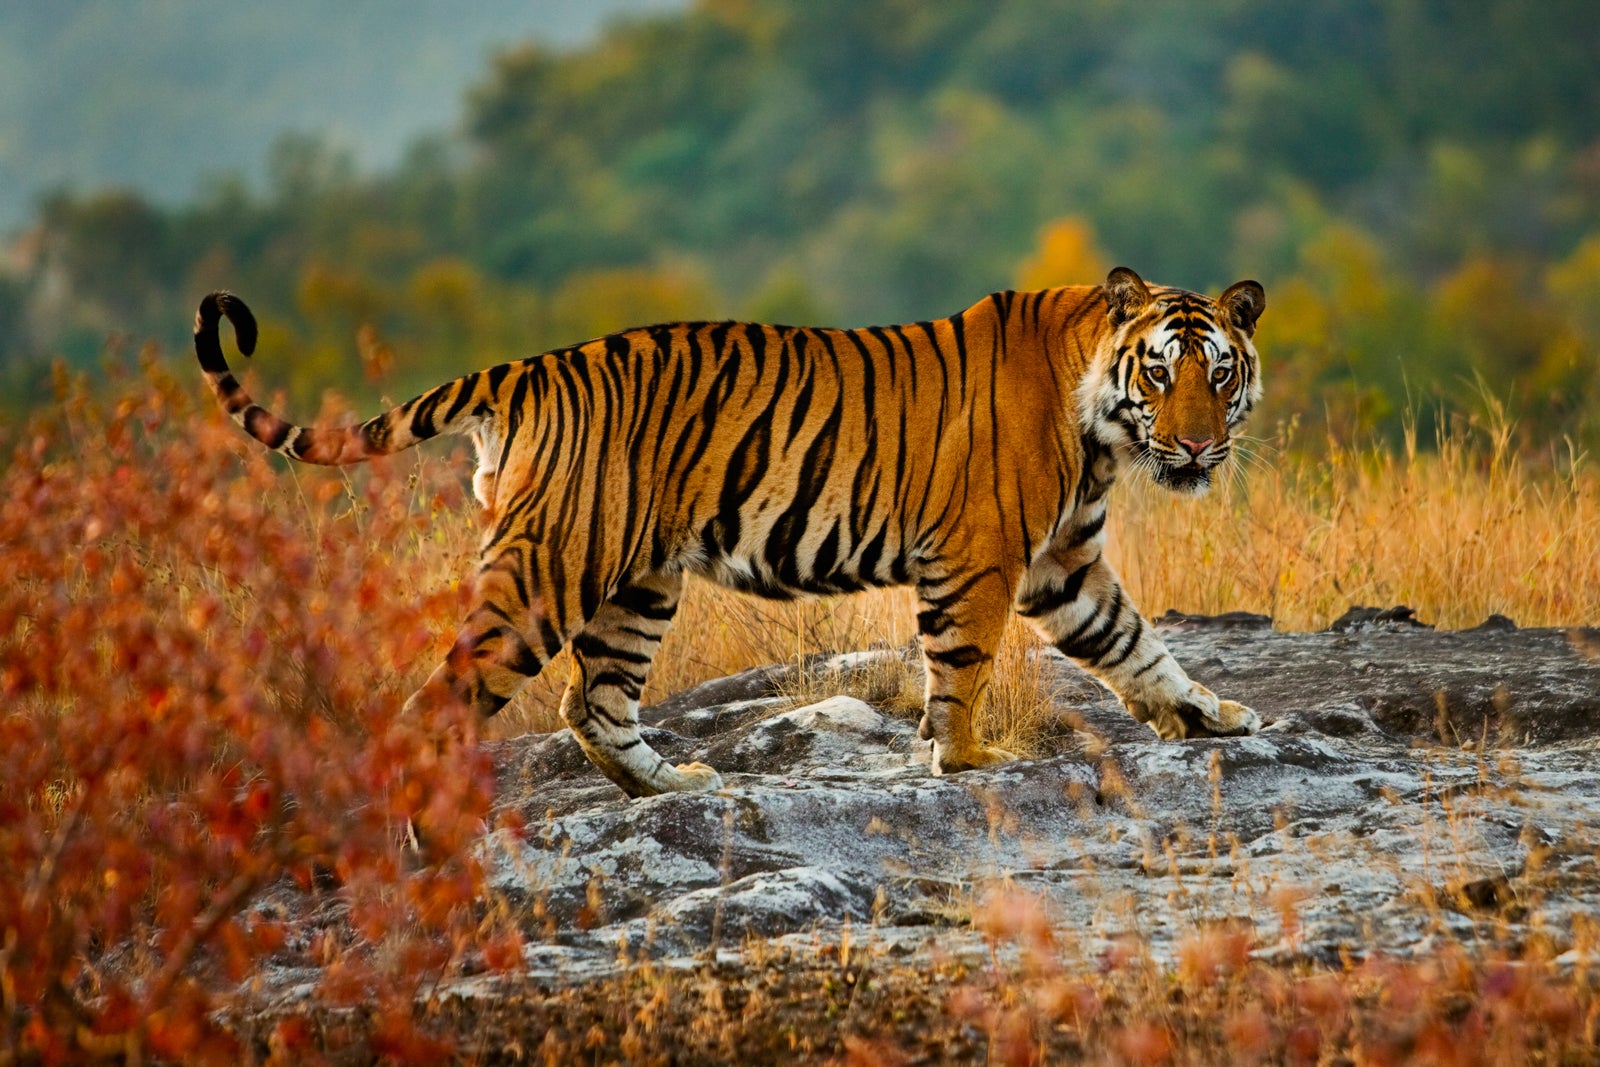 A large tiger in Bandhavgarh National Park, Madhya Pradesh, India